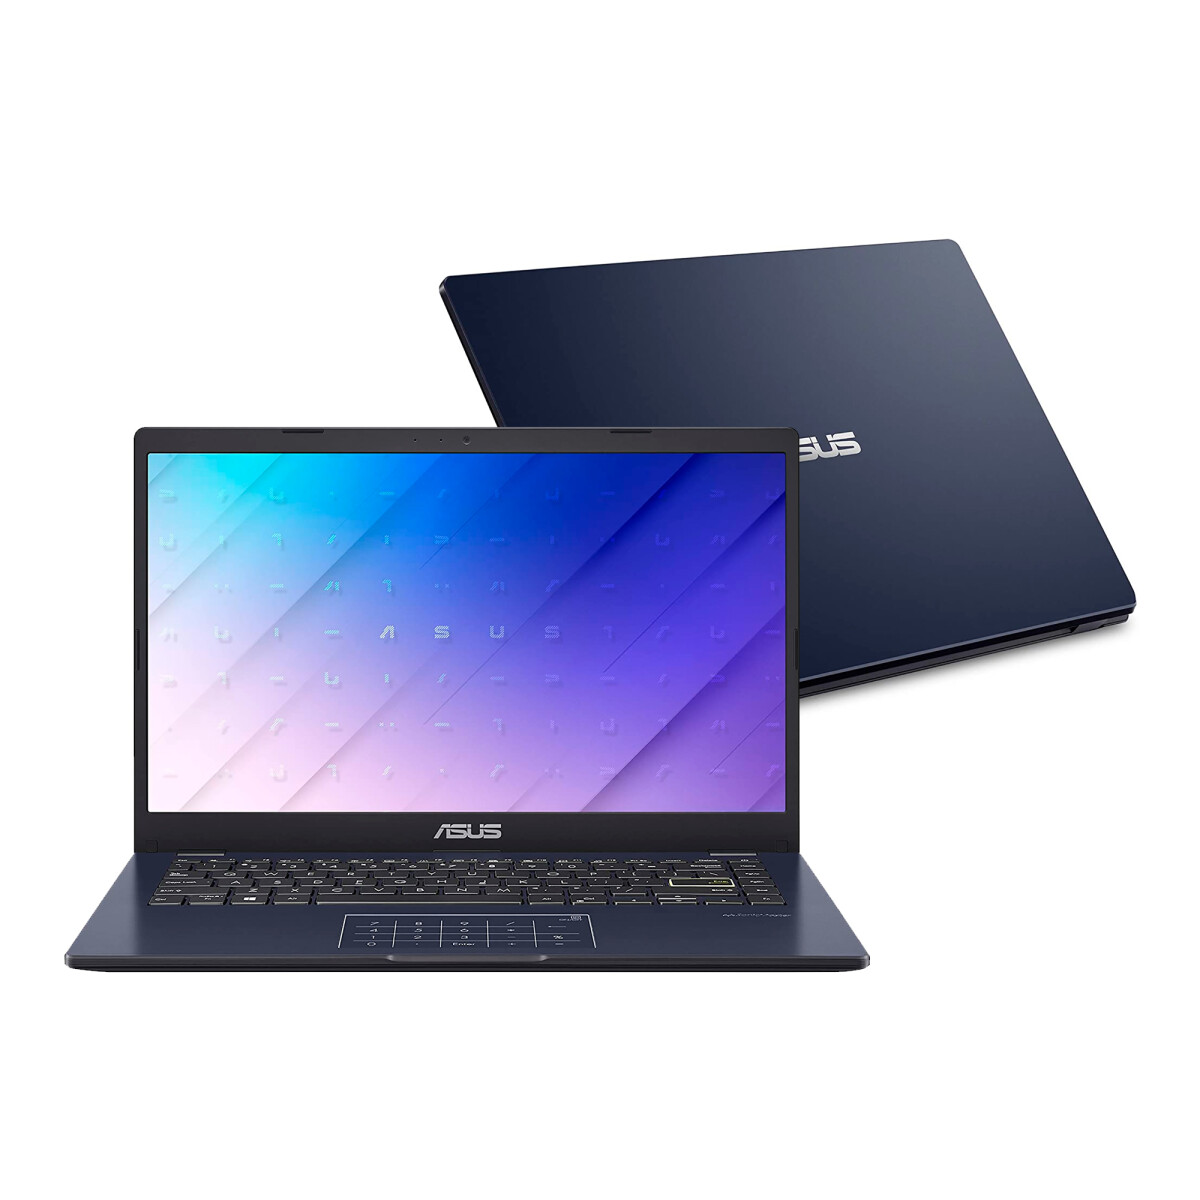 Asus - Notebook Laptop L410MA-DB02 - 14". Intel Celeron N4020. Intel Uhd 600. Windows. Ram 4GB / Emm - 001 